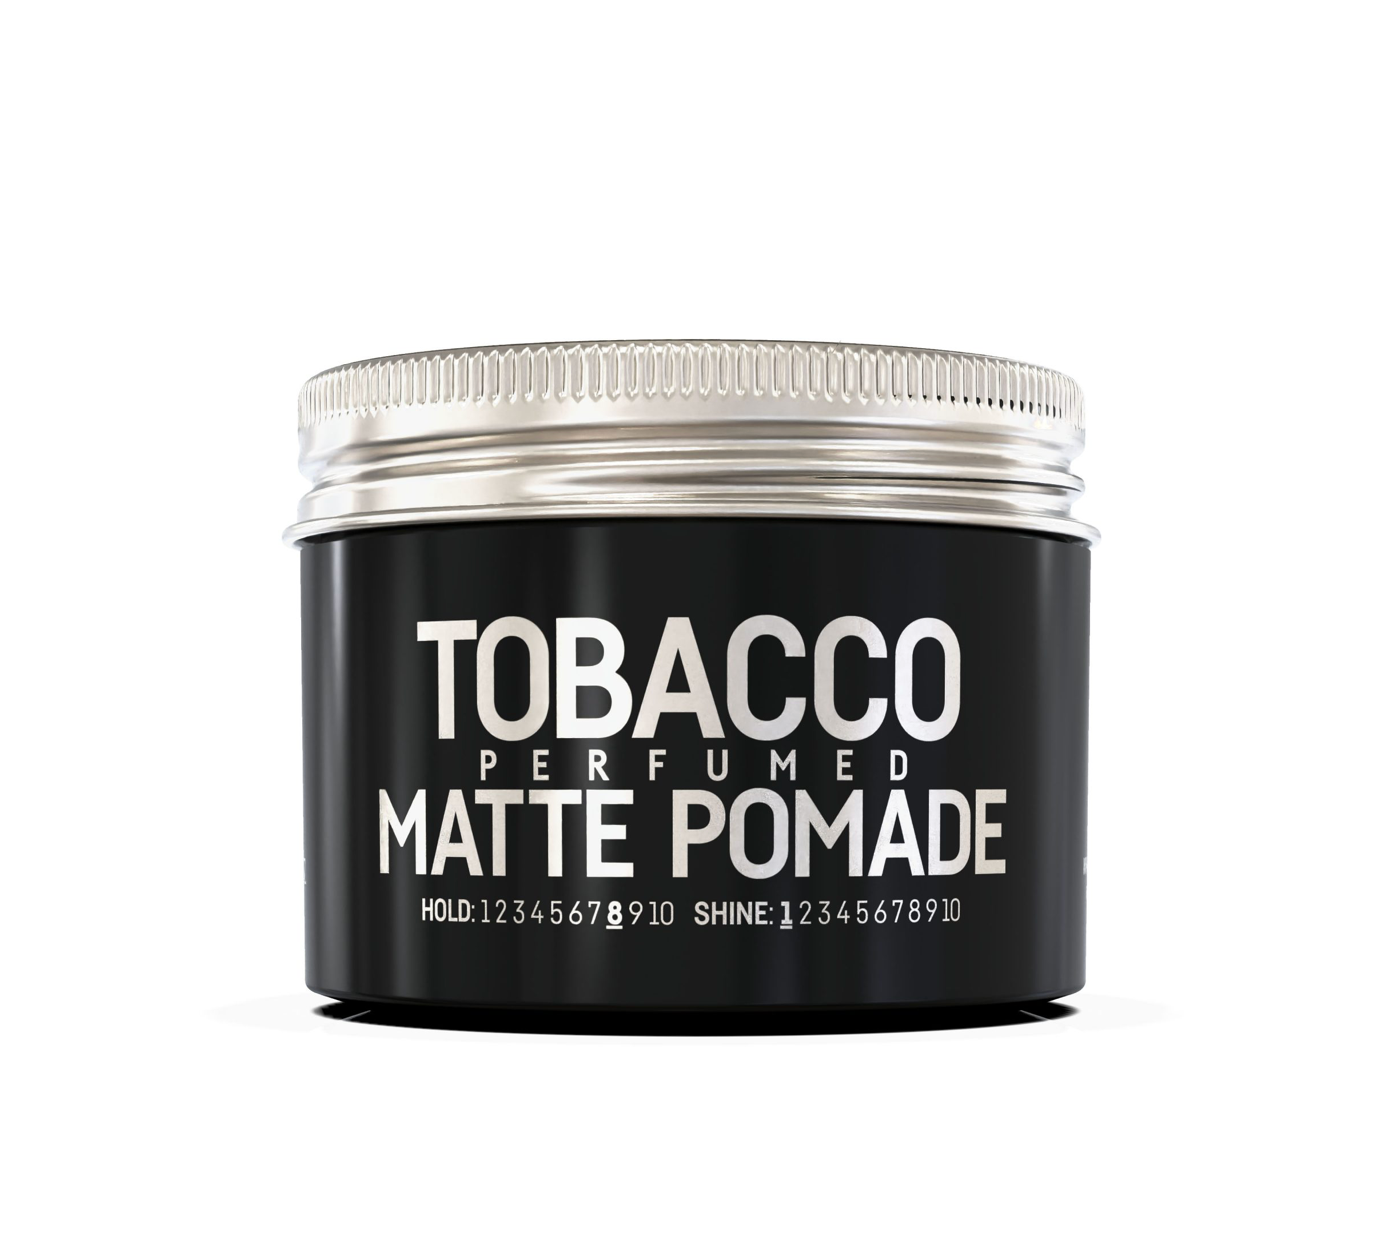 Иммортал / Immortal NYC - Помадка для укладки волос матовая Tobacco Perfumed Matte 100 мл